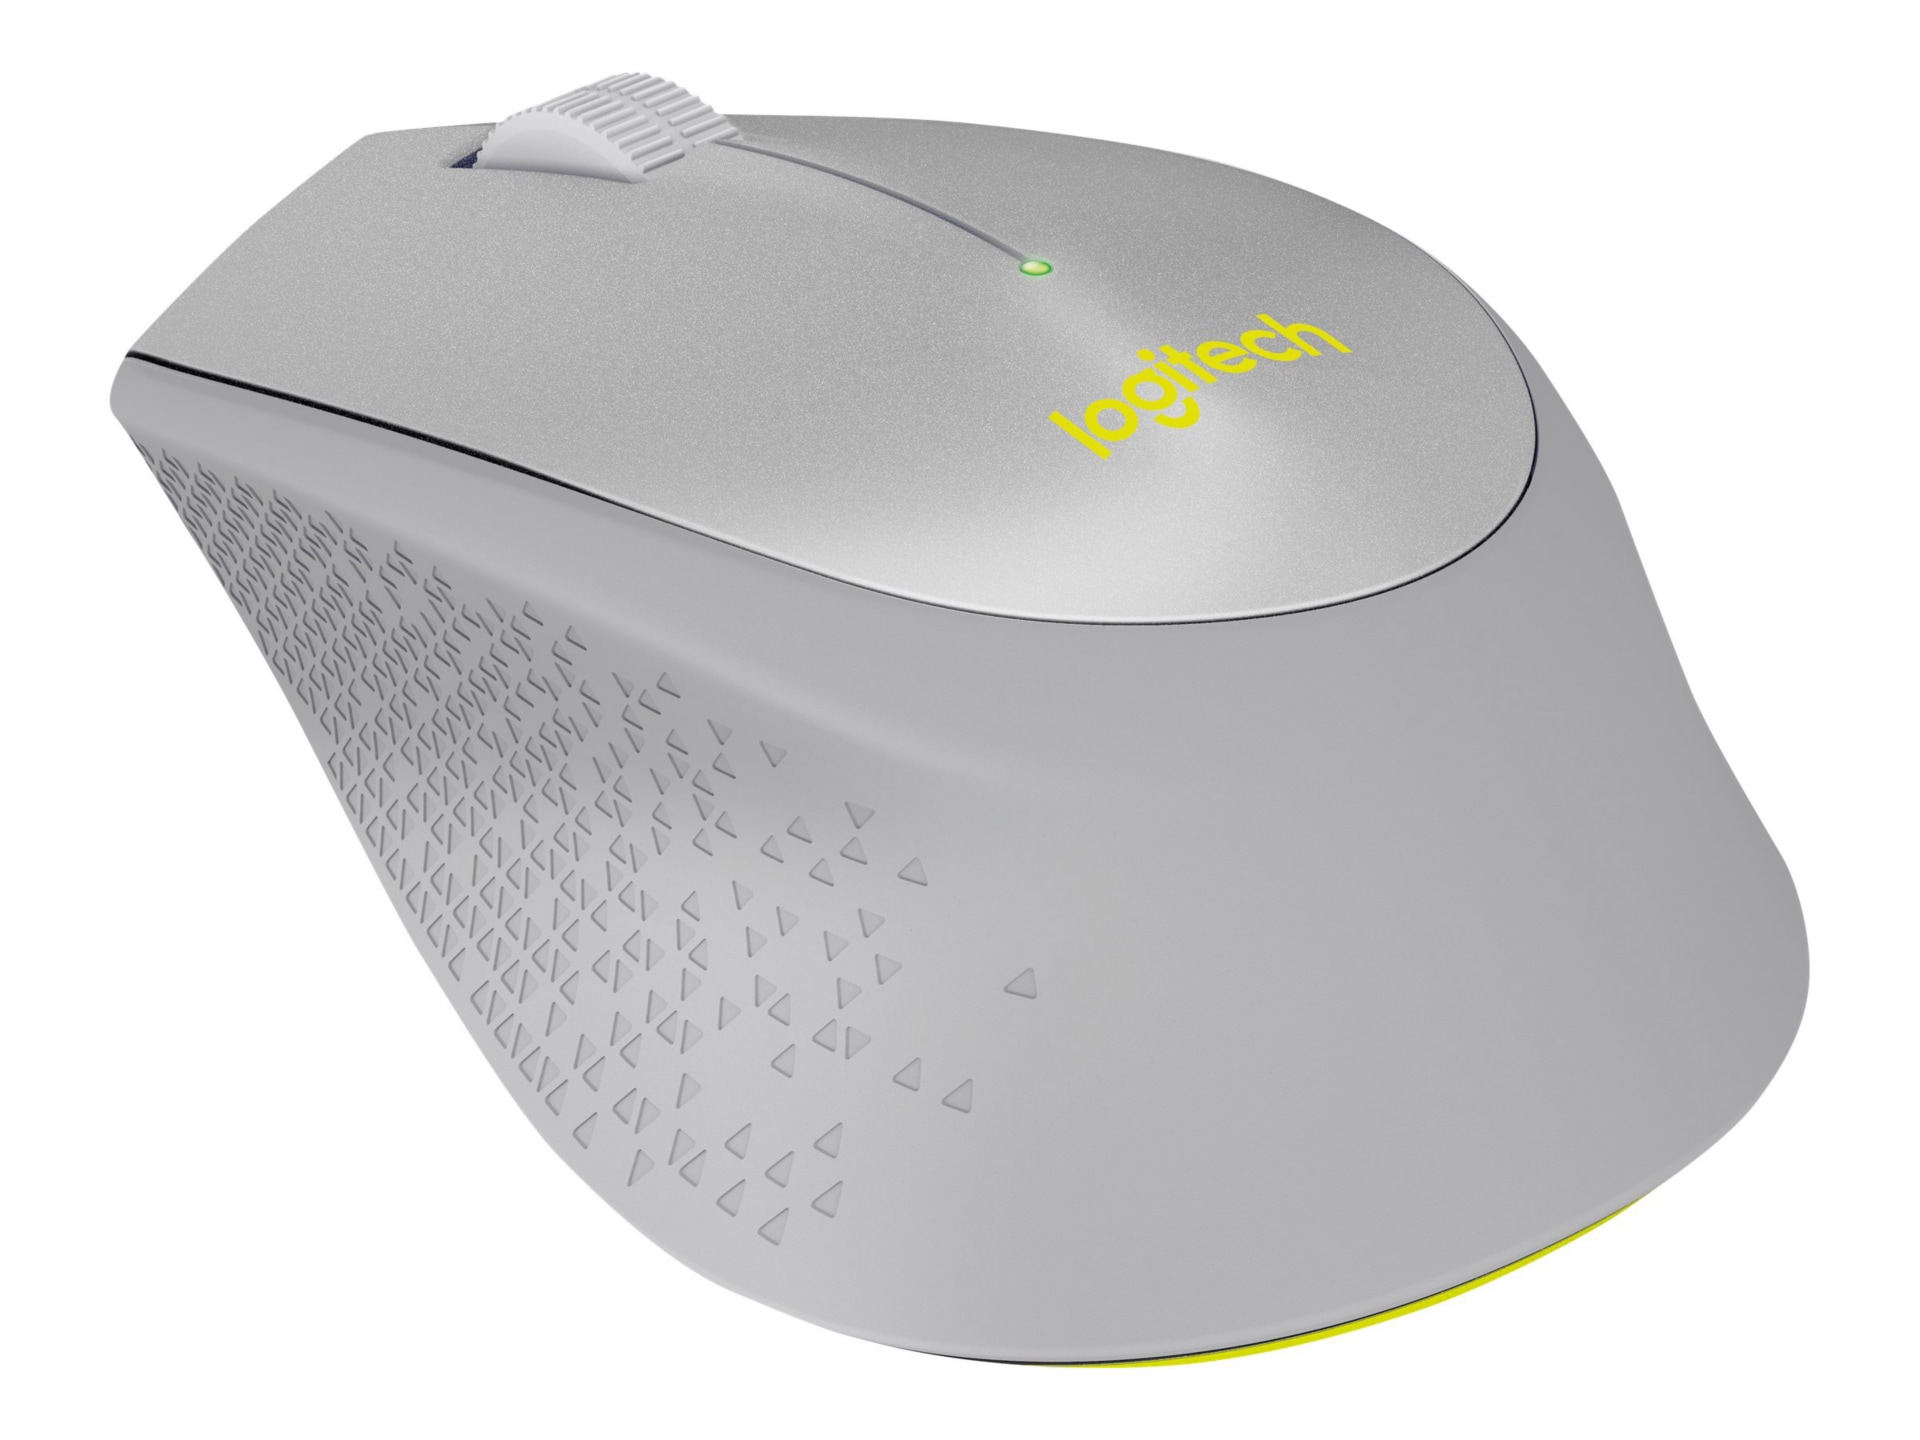 Logitech M330 SILENT PLUS - mouse - 2.4 GHz - gray, yellow